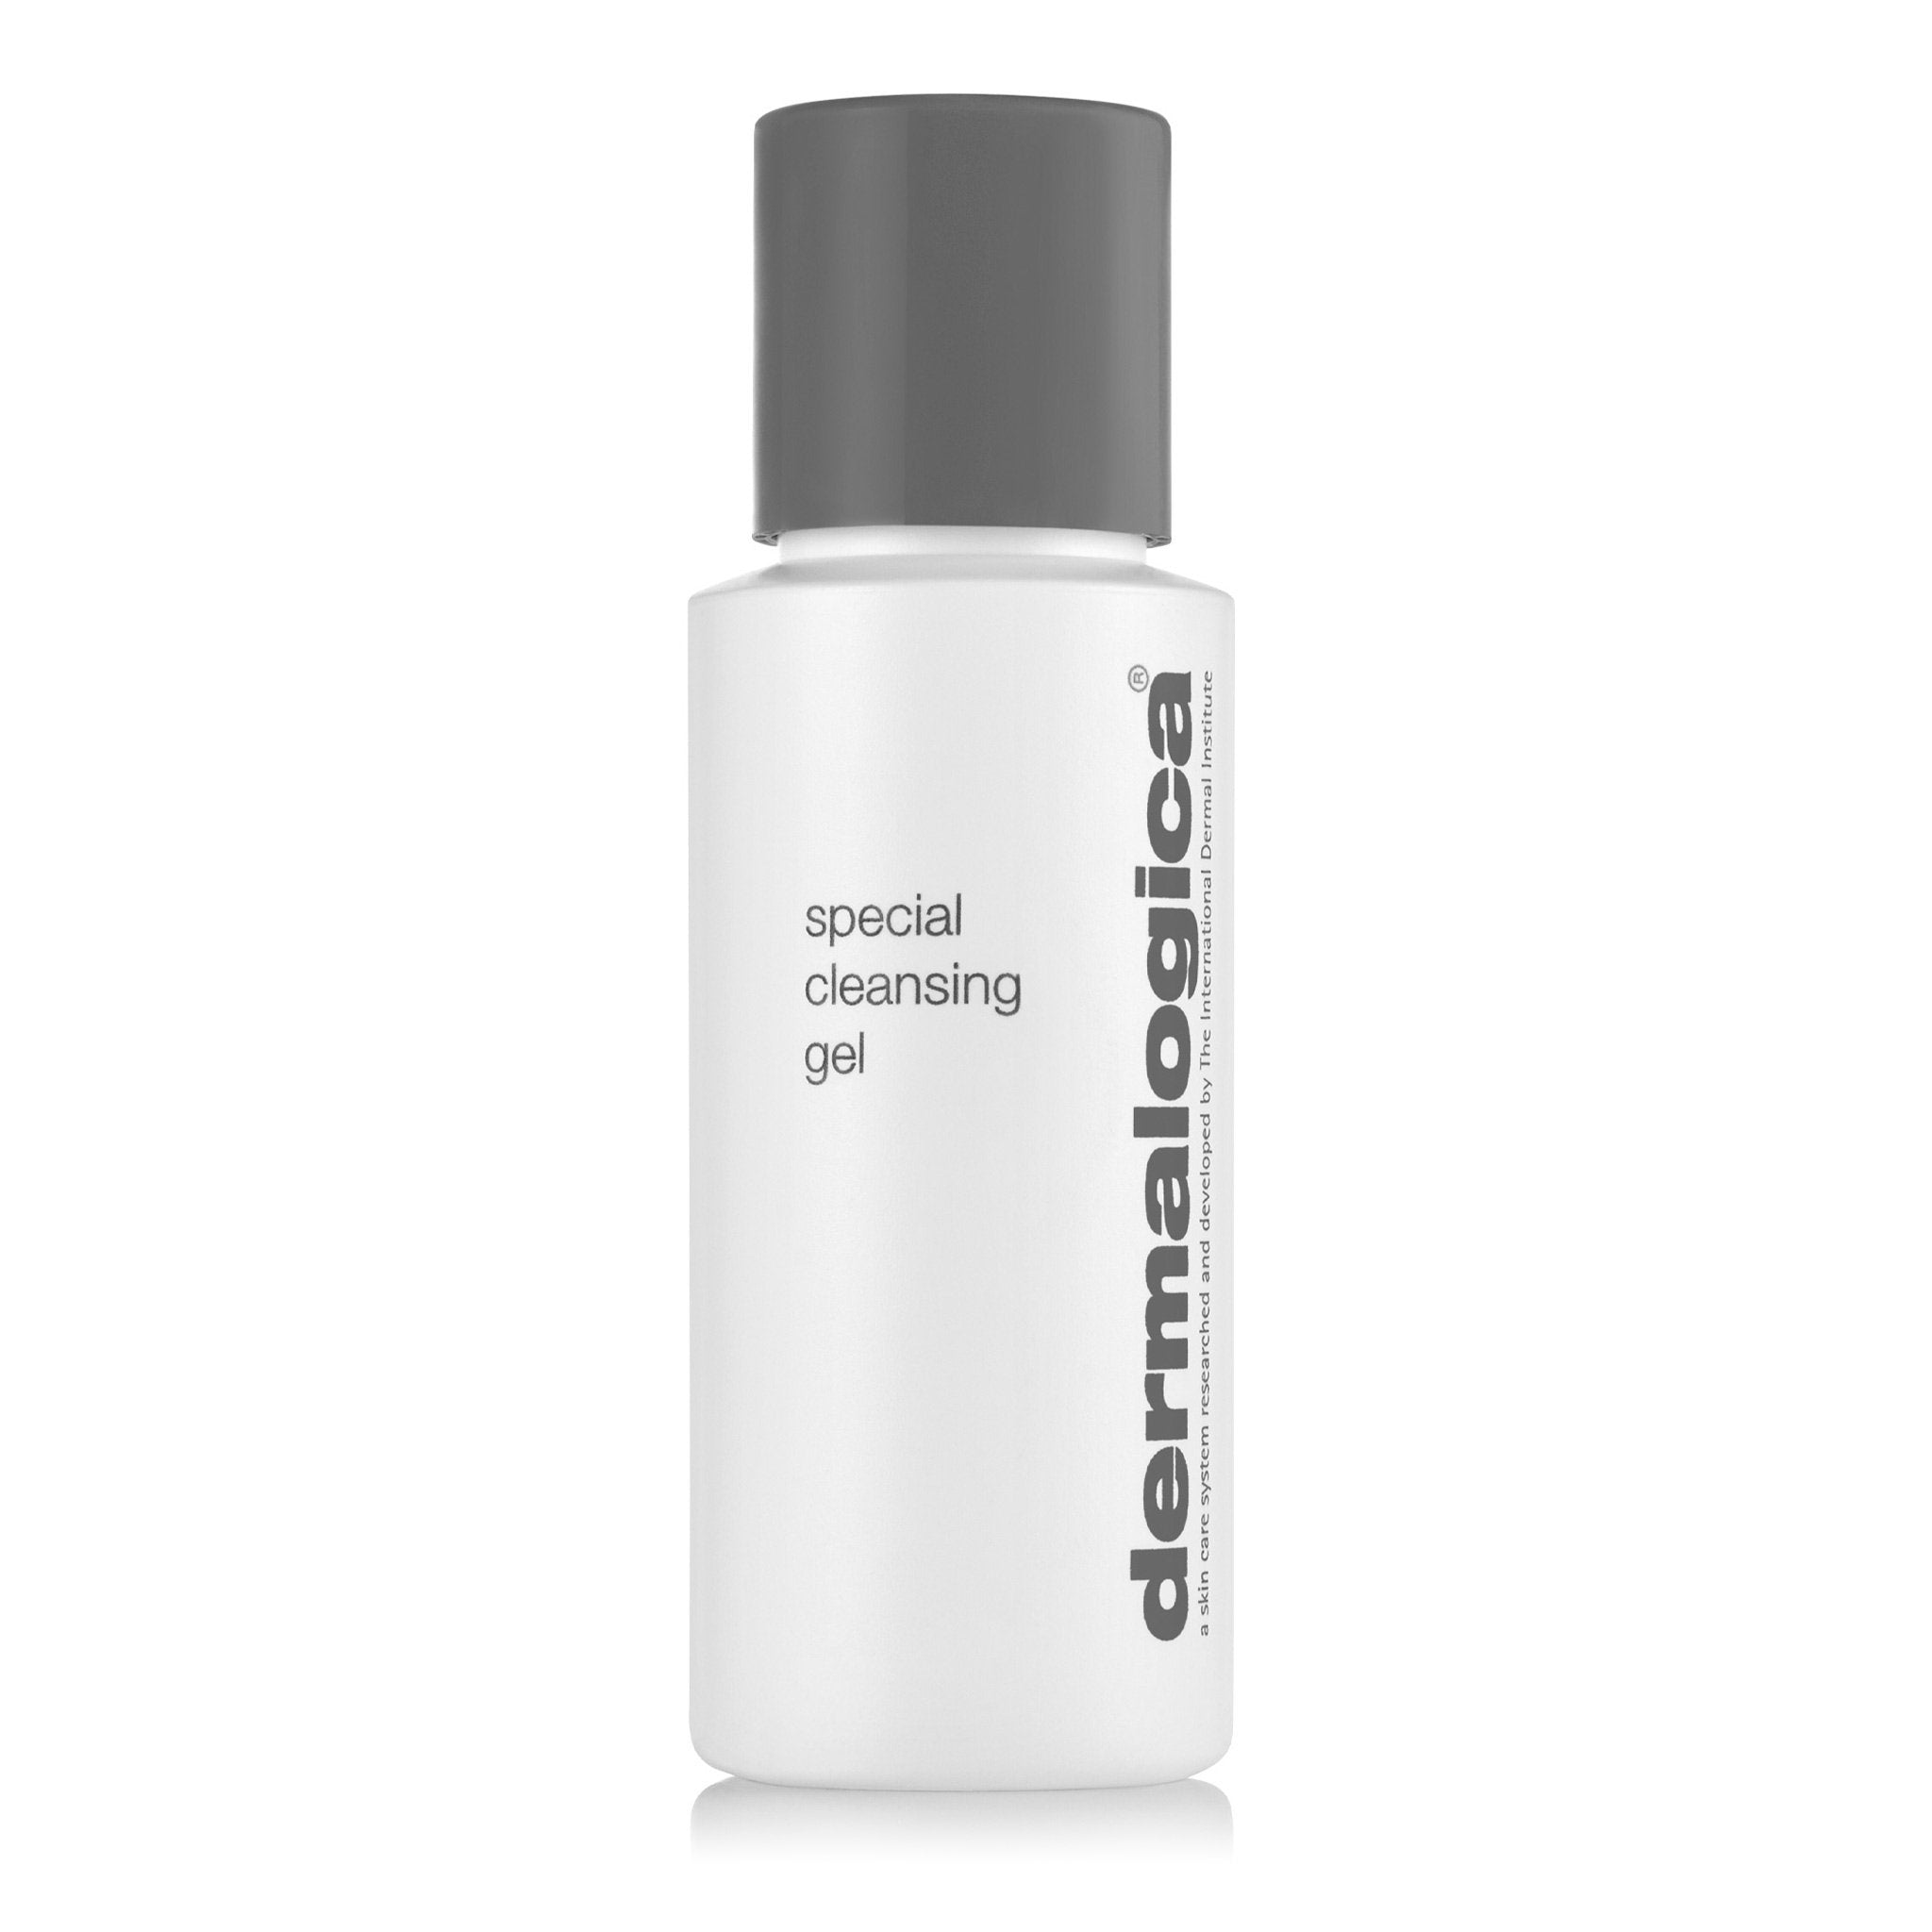 Dermalogica special cleansing gel 50ml - Travel Size - Gentle Face Wash